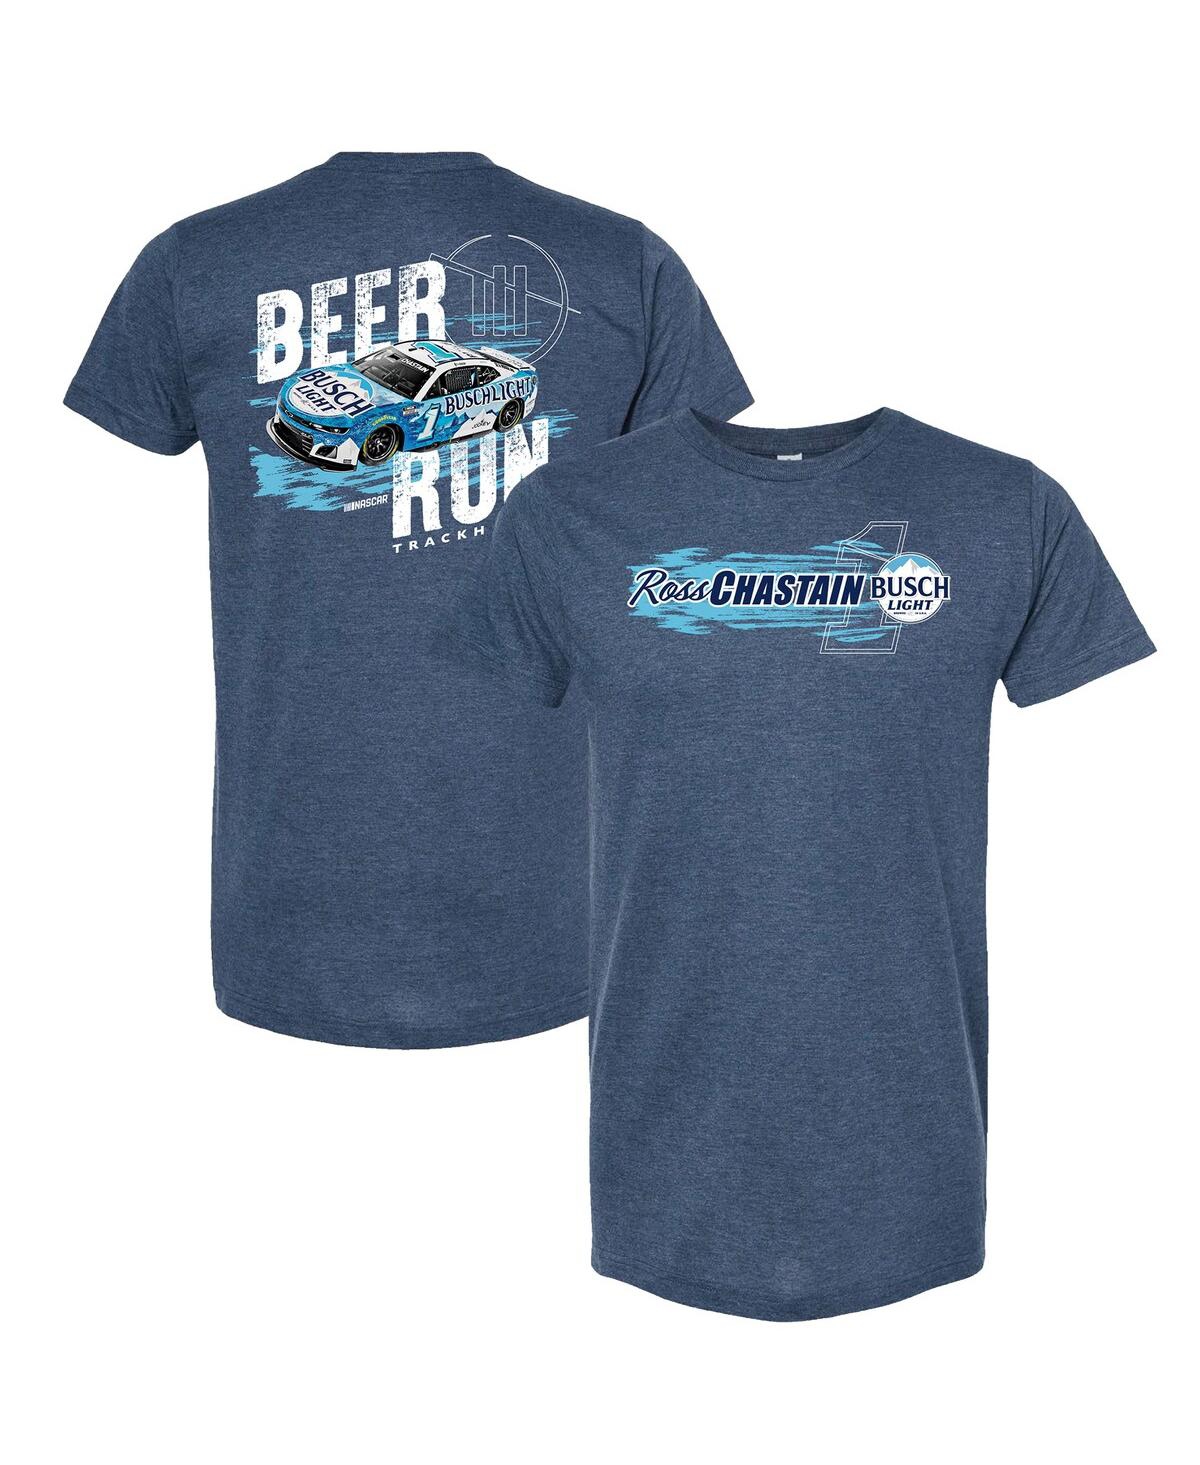 Trackhouse Racing Team Collection Men's  Heather Navy Ross Chastain Busch Light Beer Run T-shirt